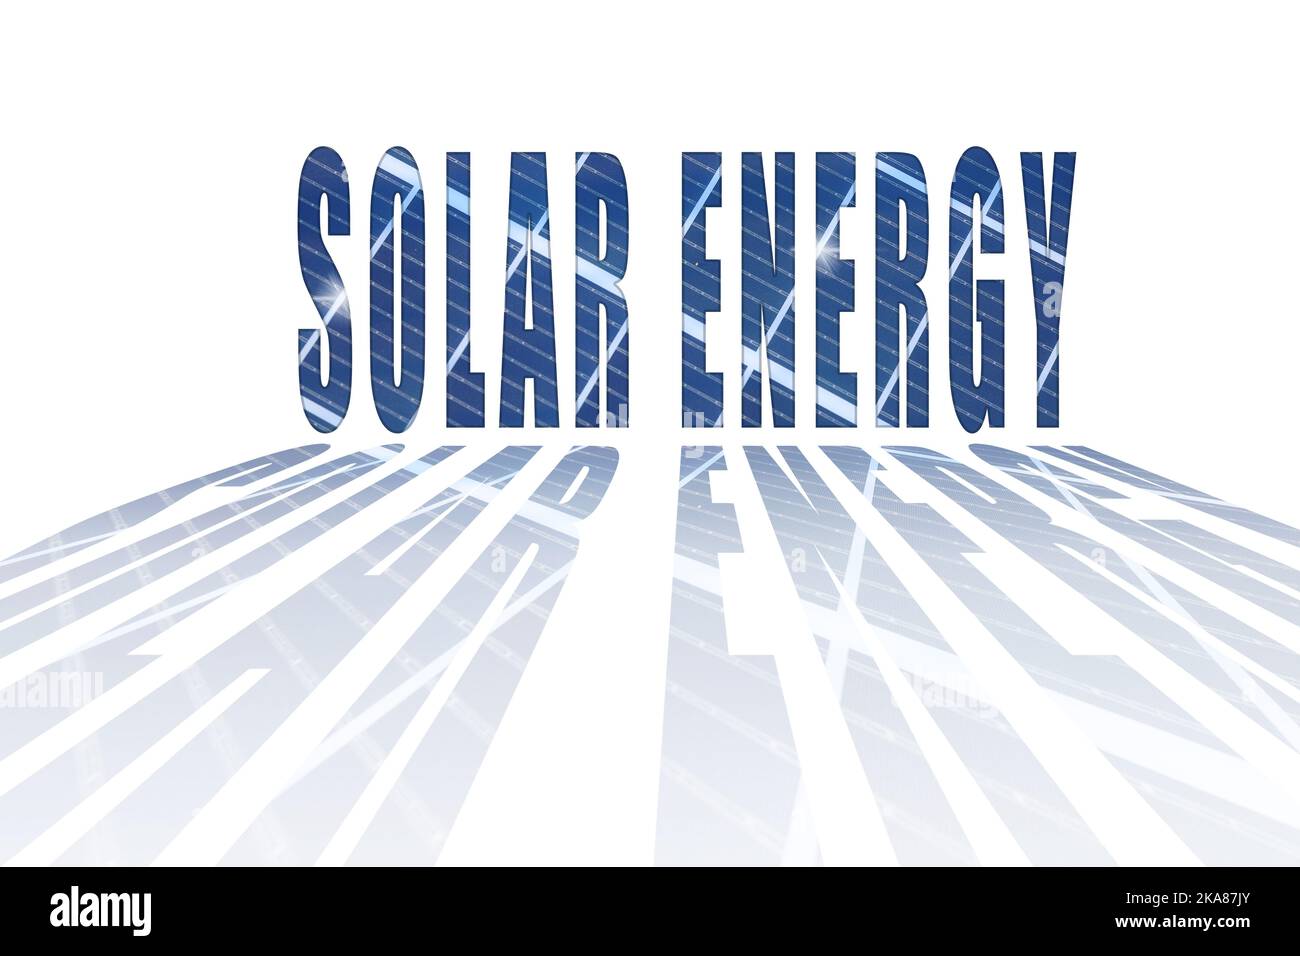 Solar energy written word letters, illustration. Caption 'SOLAR ENERGY' Stock Photo